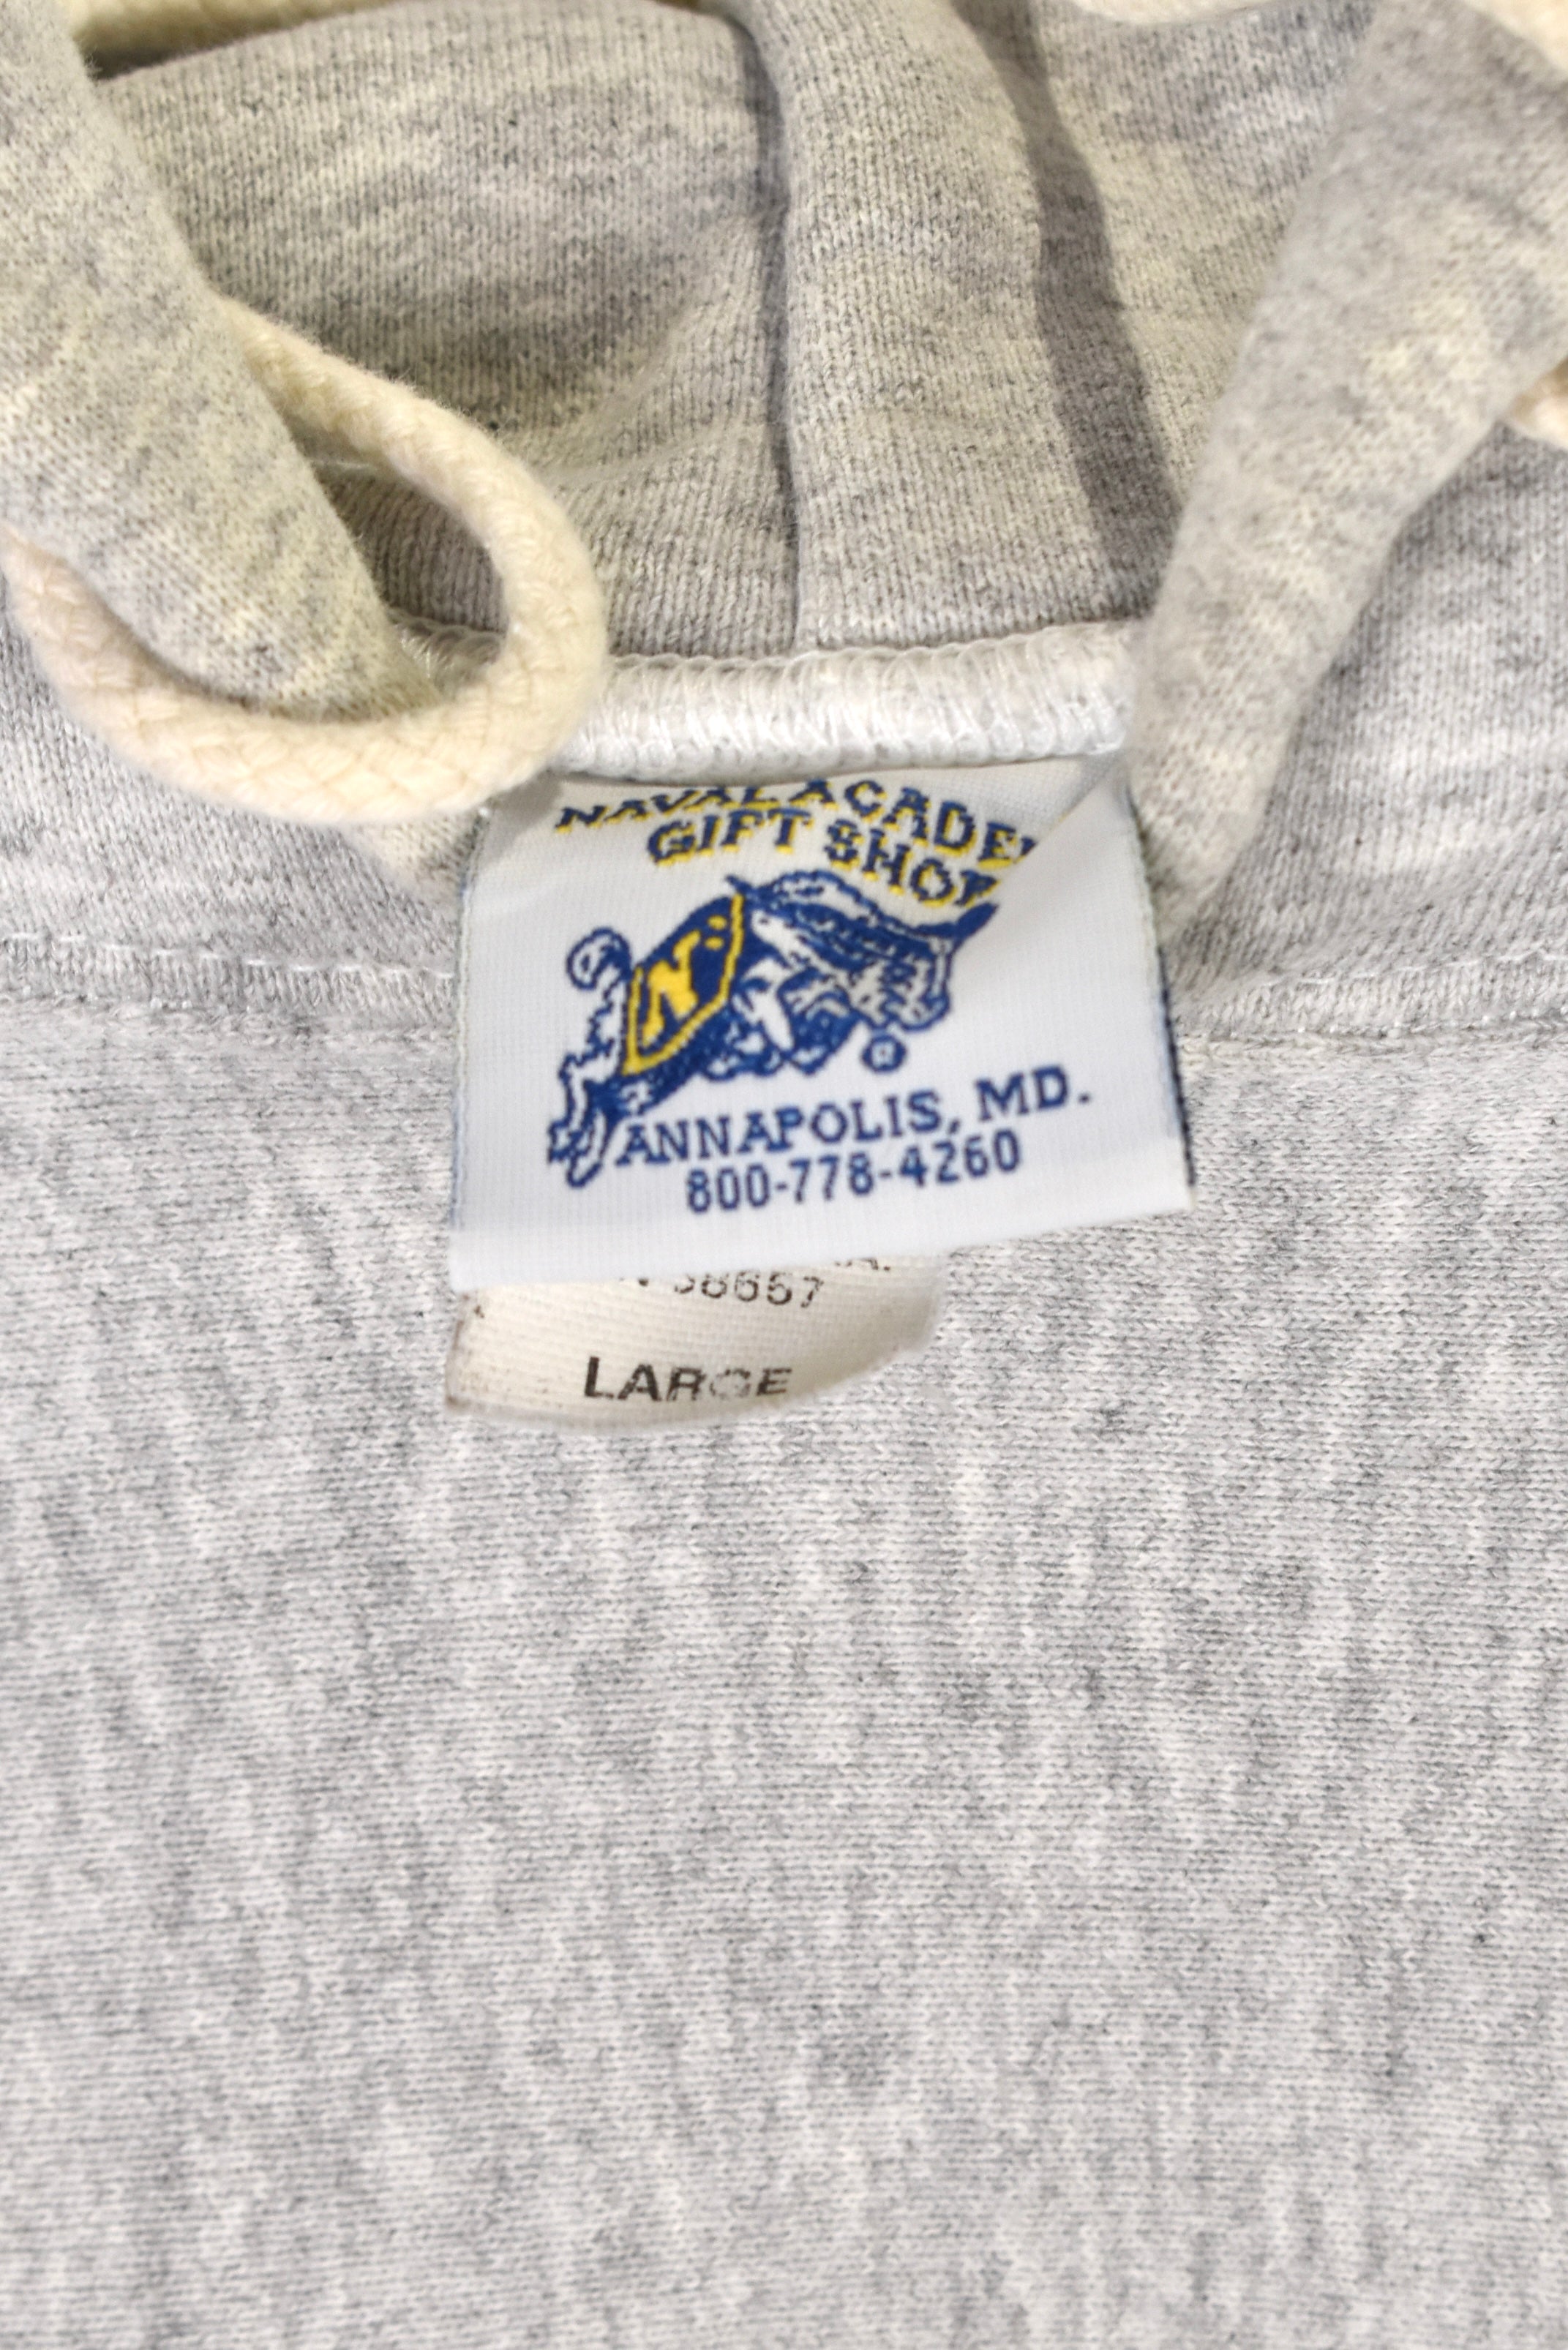 Vintage University of Notre Dame hoodie (L), grey embroidered sweatshirt